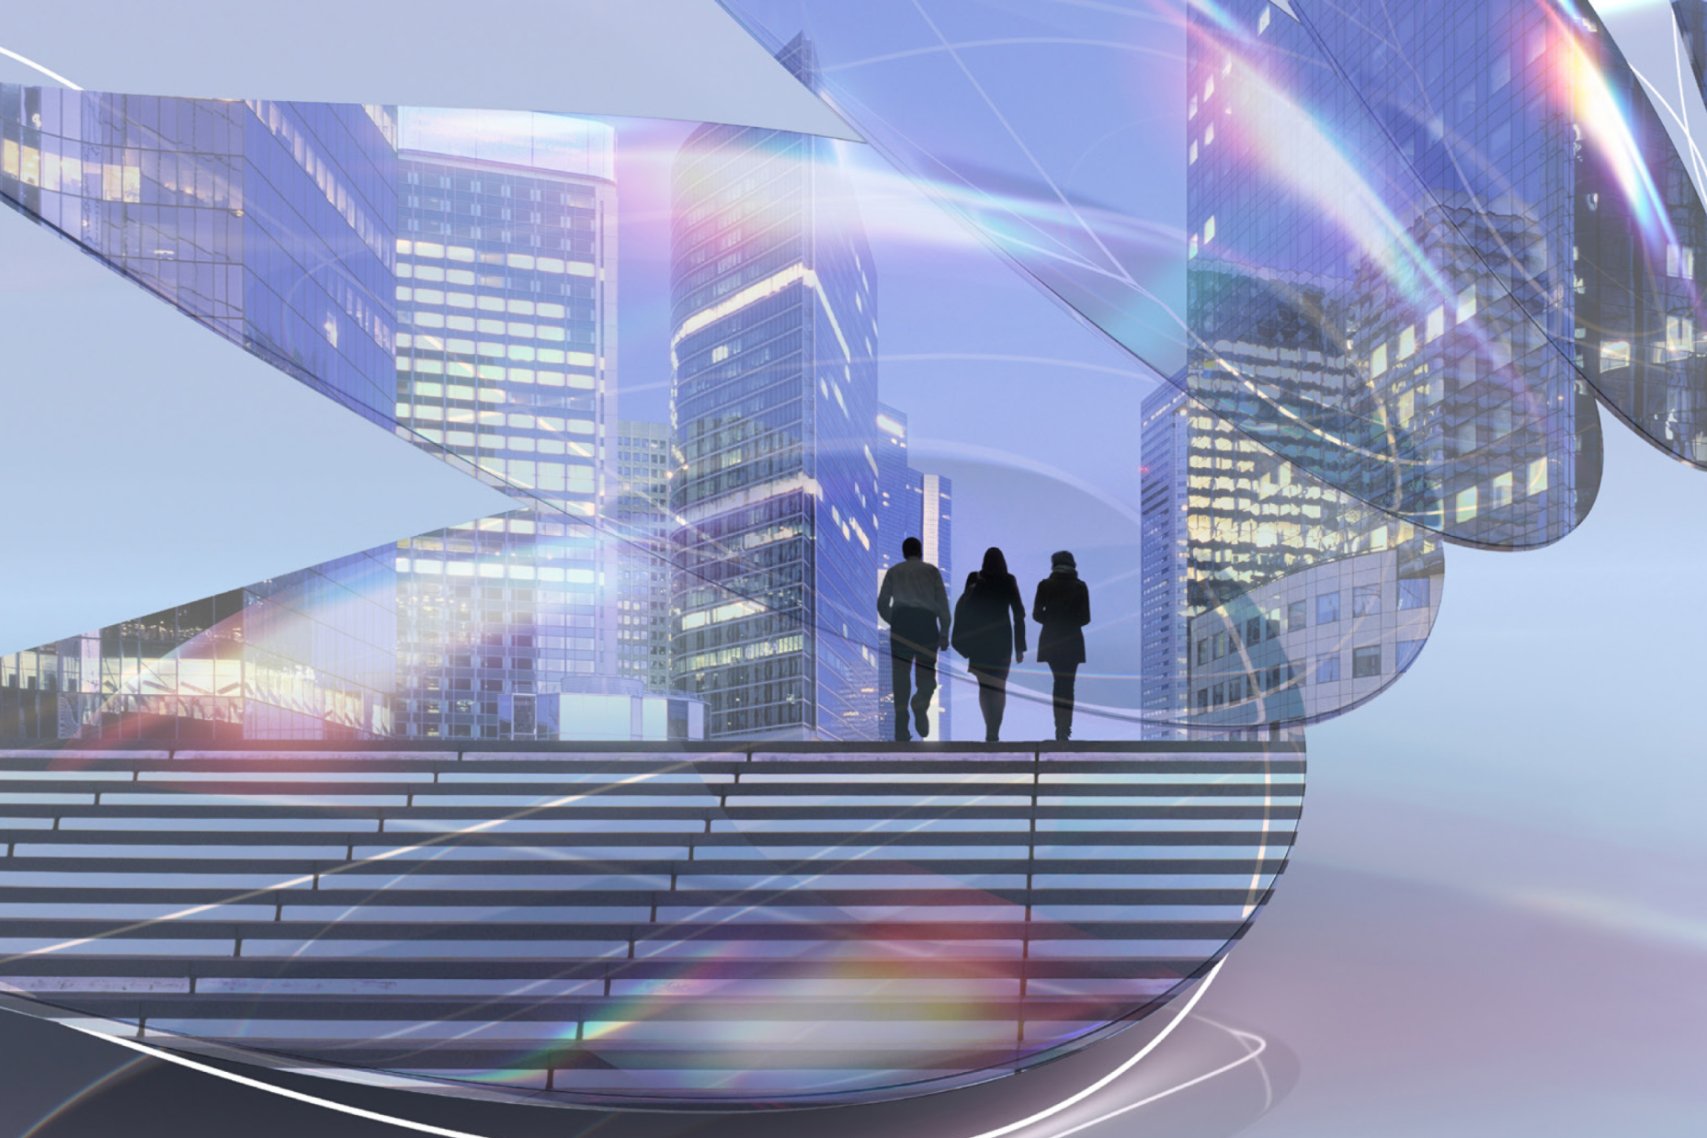 Three silhouettes of people walking in virtual urban environment